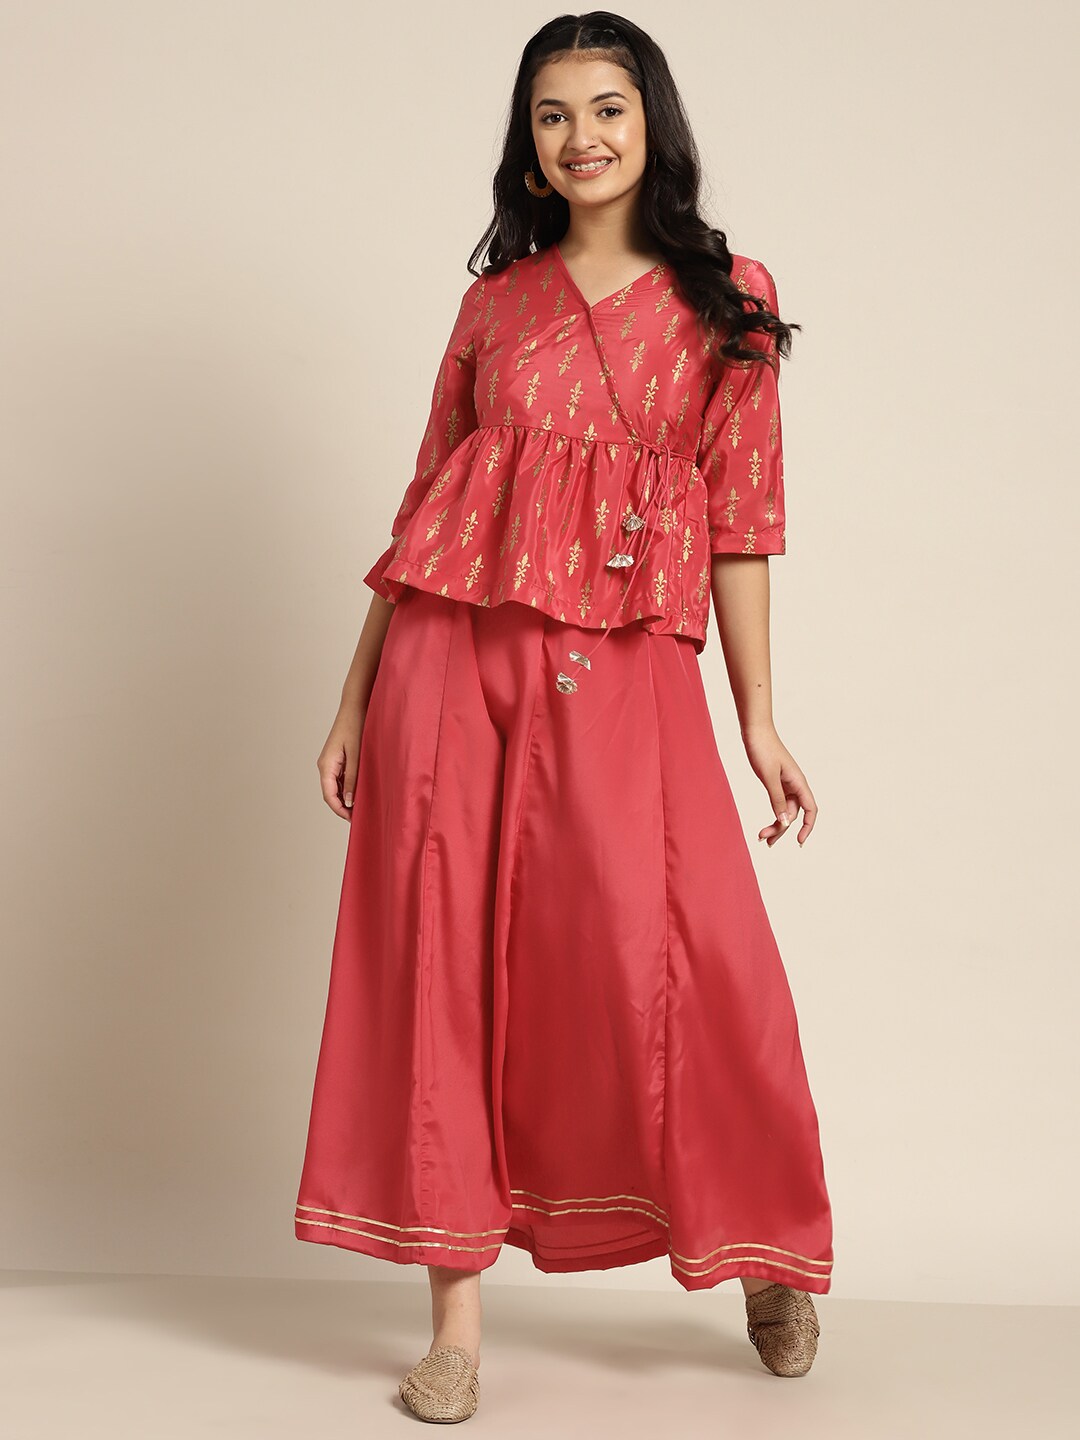 Sangria Teen Girls Pink & Golden Ethnic Motifs Print Ready to Wear Lehenga Choli Price in India